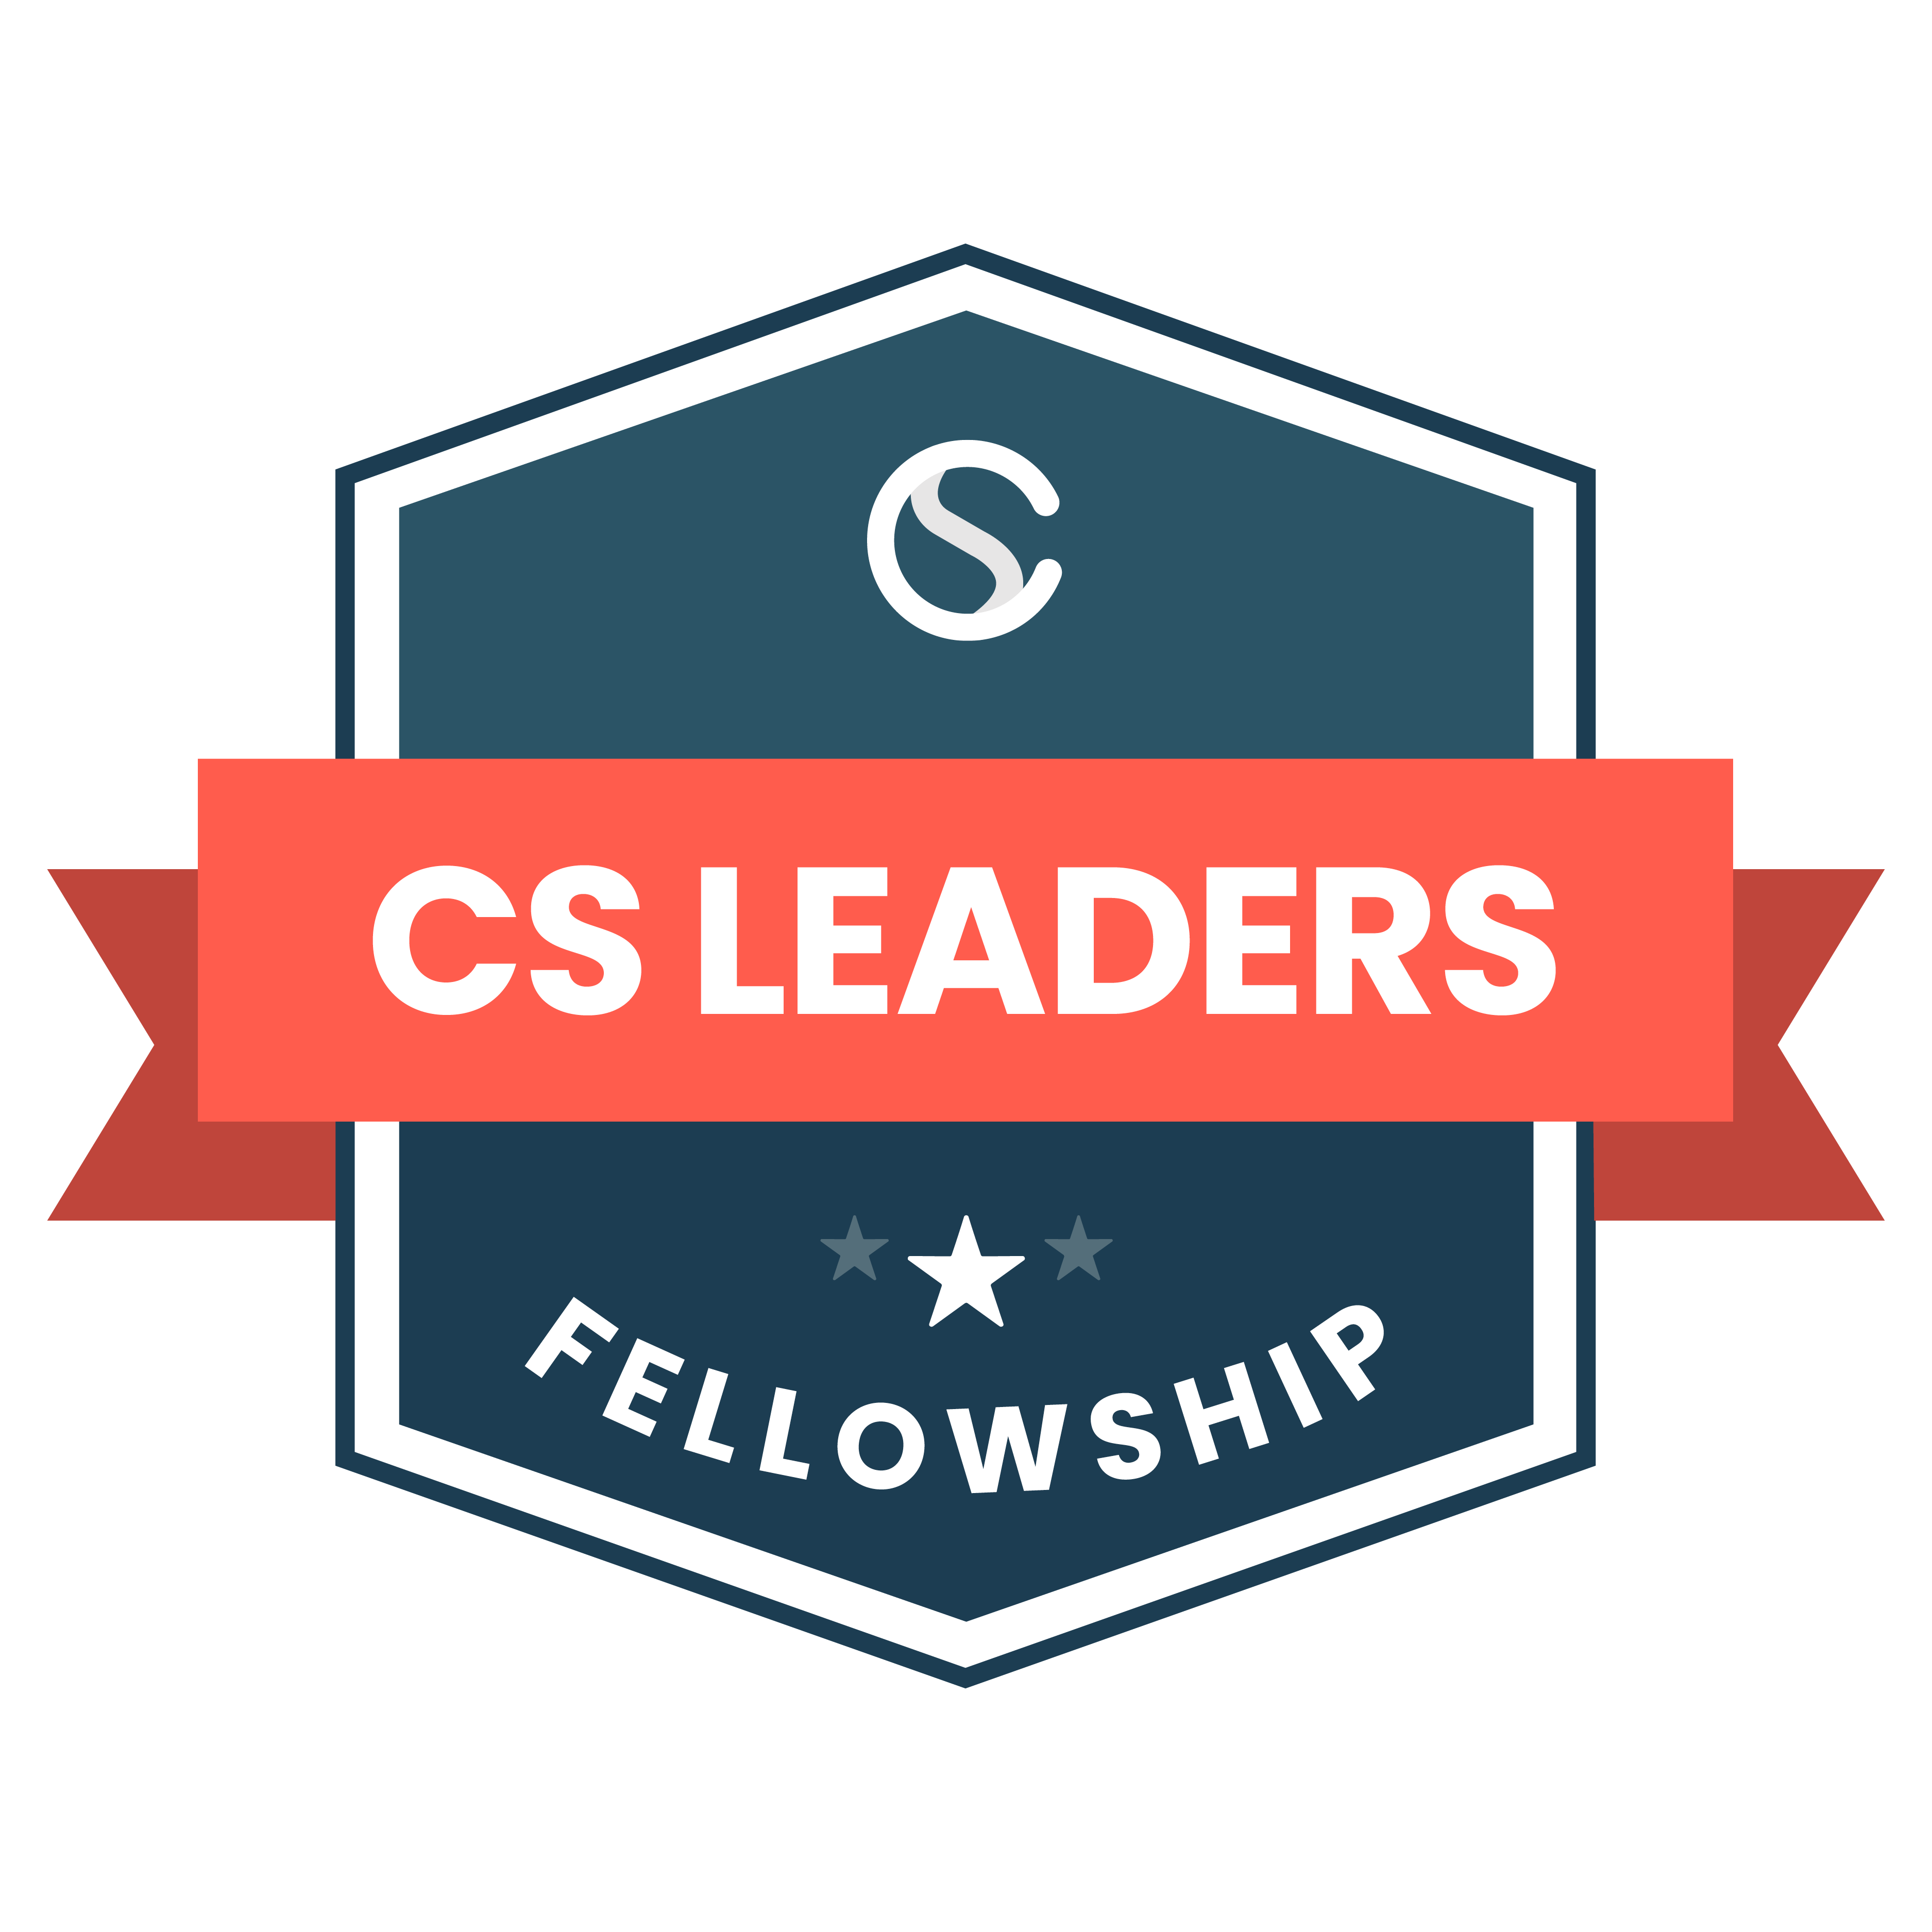 CS Leaders: Fellowship